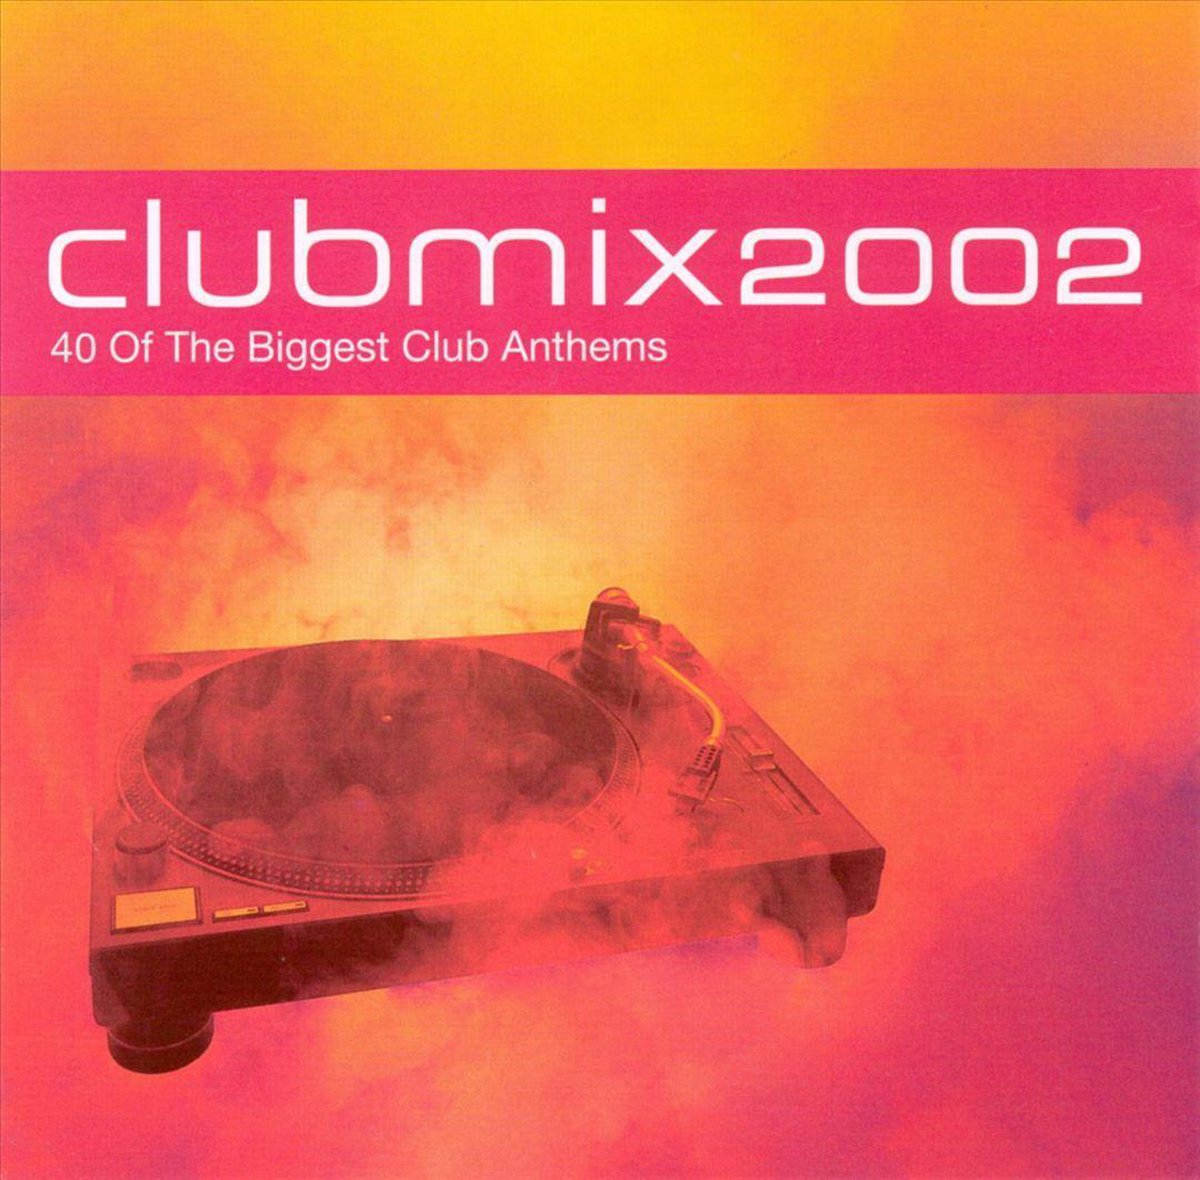 Club Mix 2002 - various artists